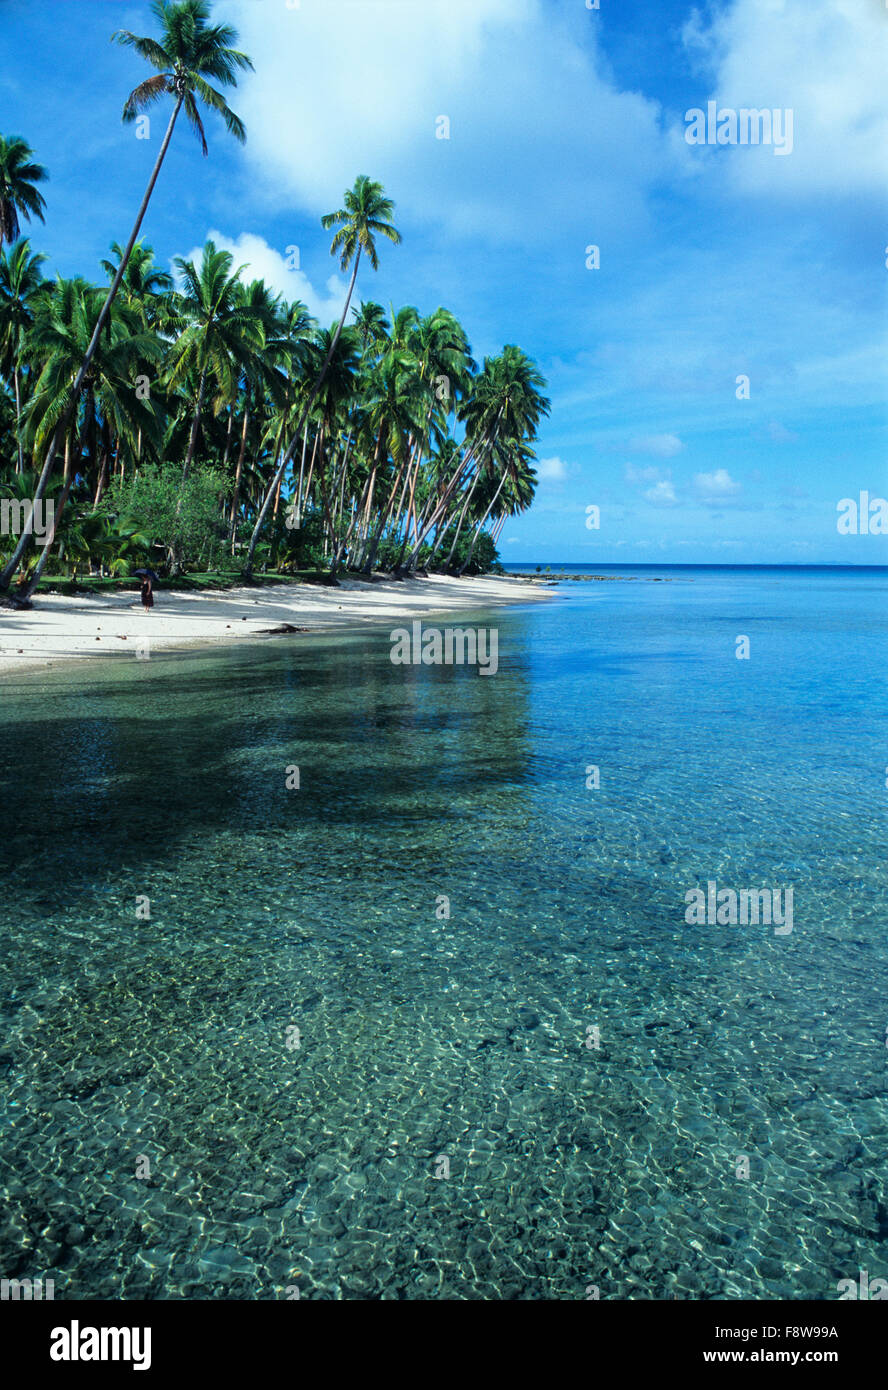 Fiji Islands, Viti Levu, Jean-Michel Cousteau, Fiji Islands Resort, island beach scene Stock Photo